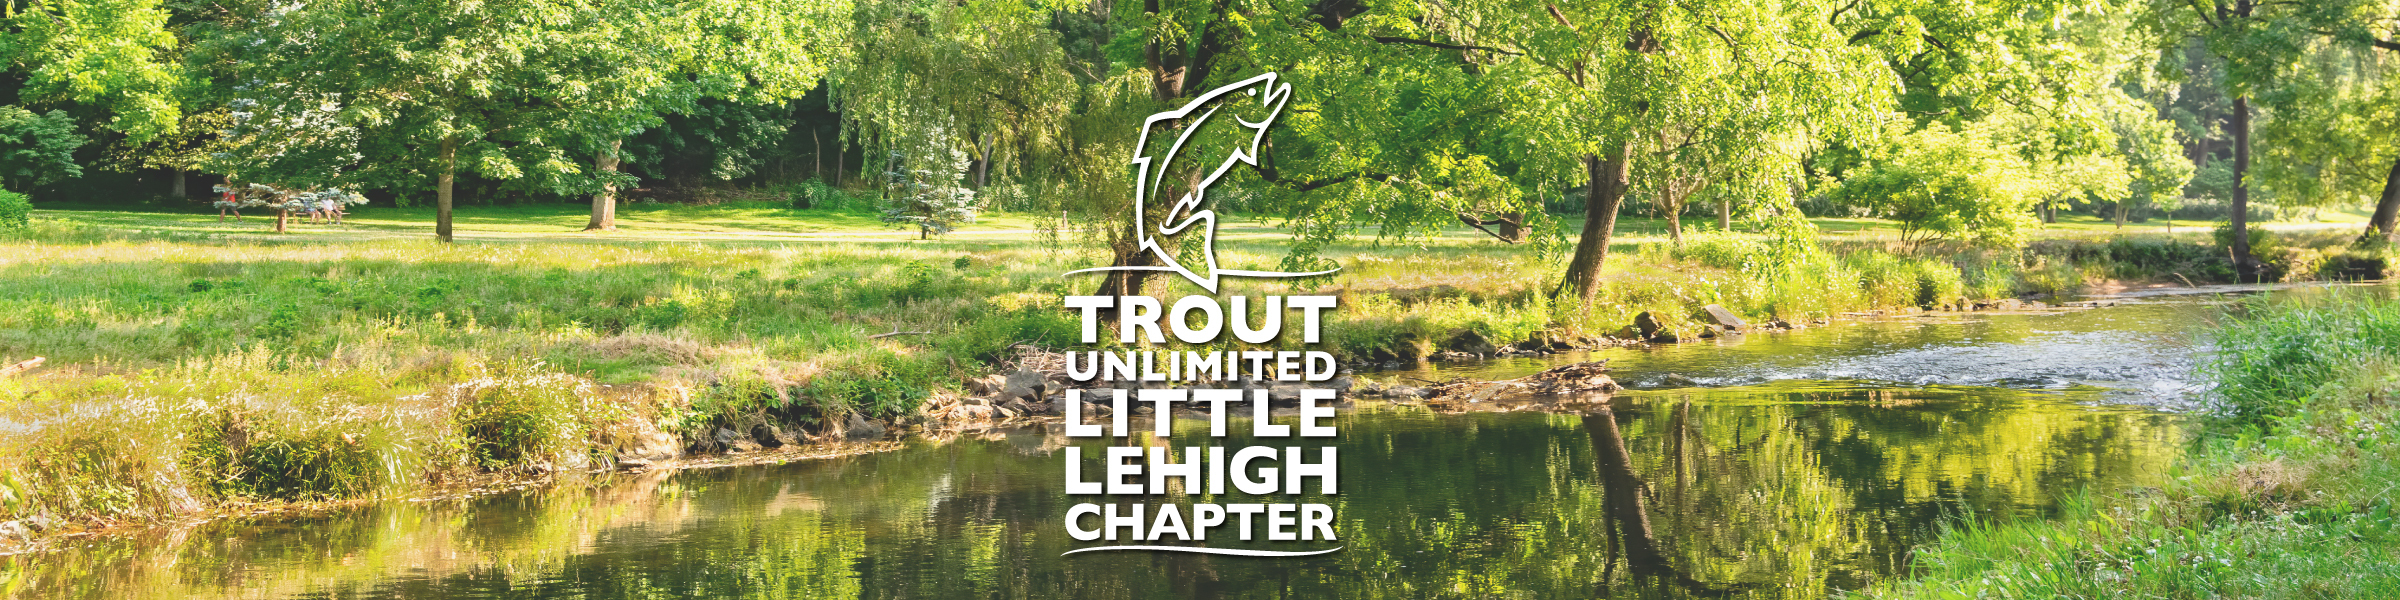 Little Lehigh Trout Unlimited Banner